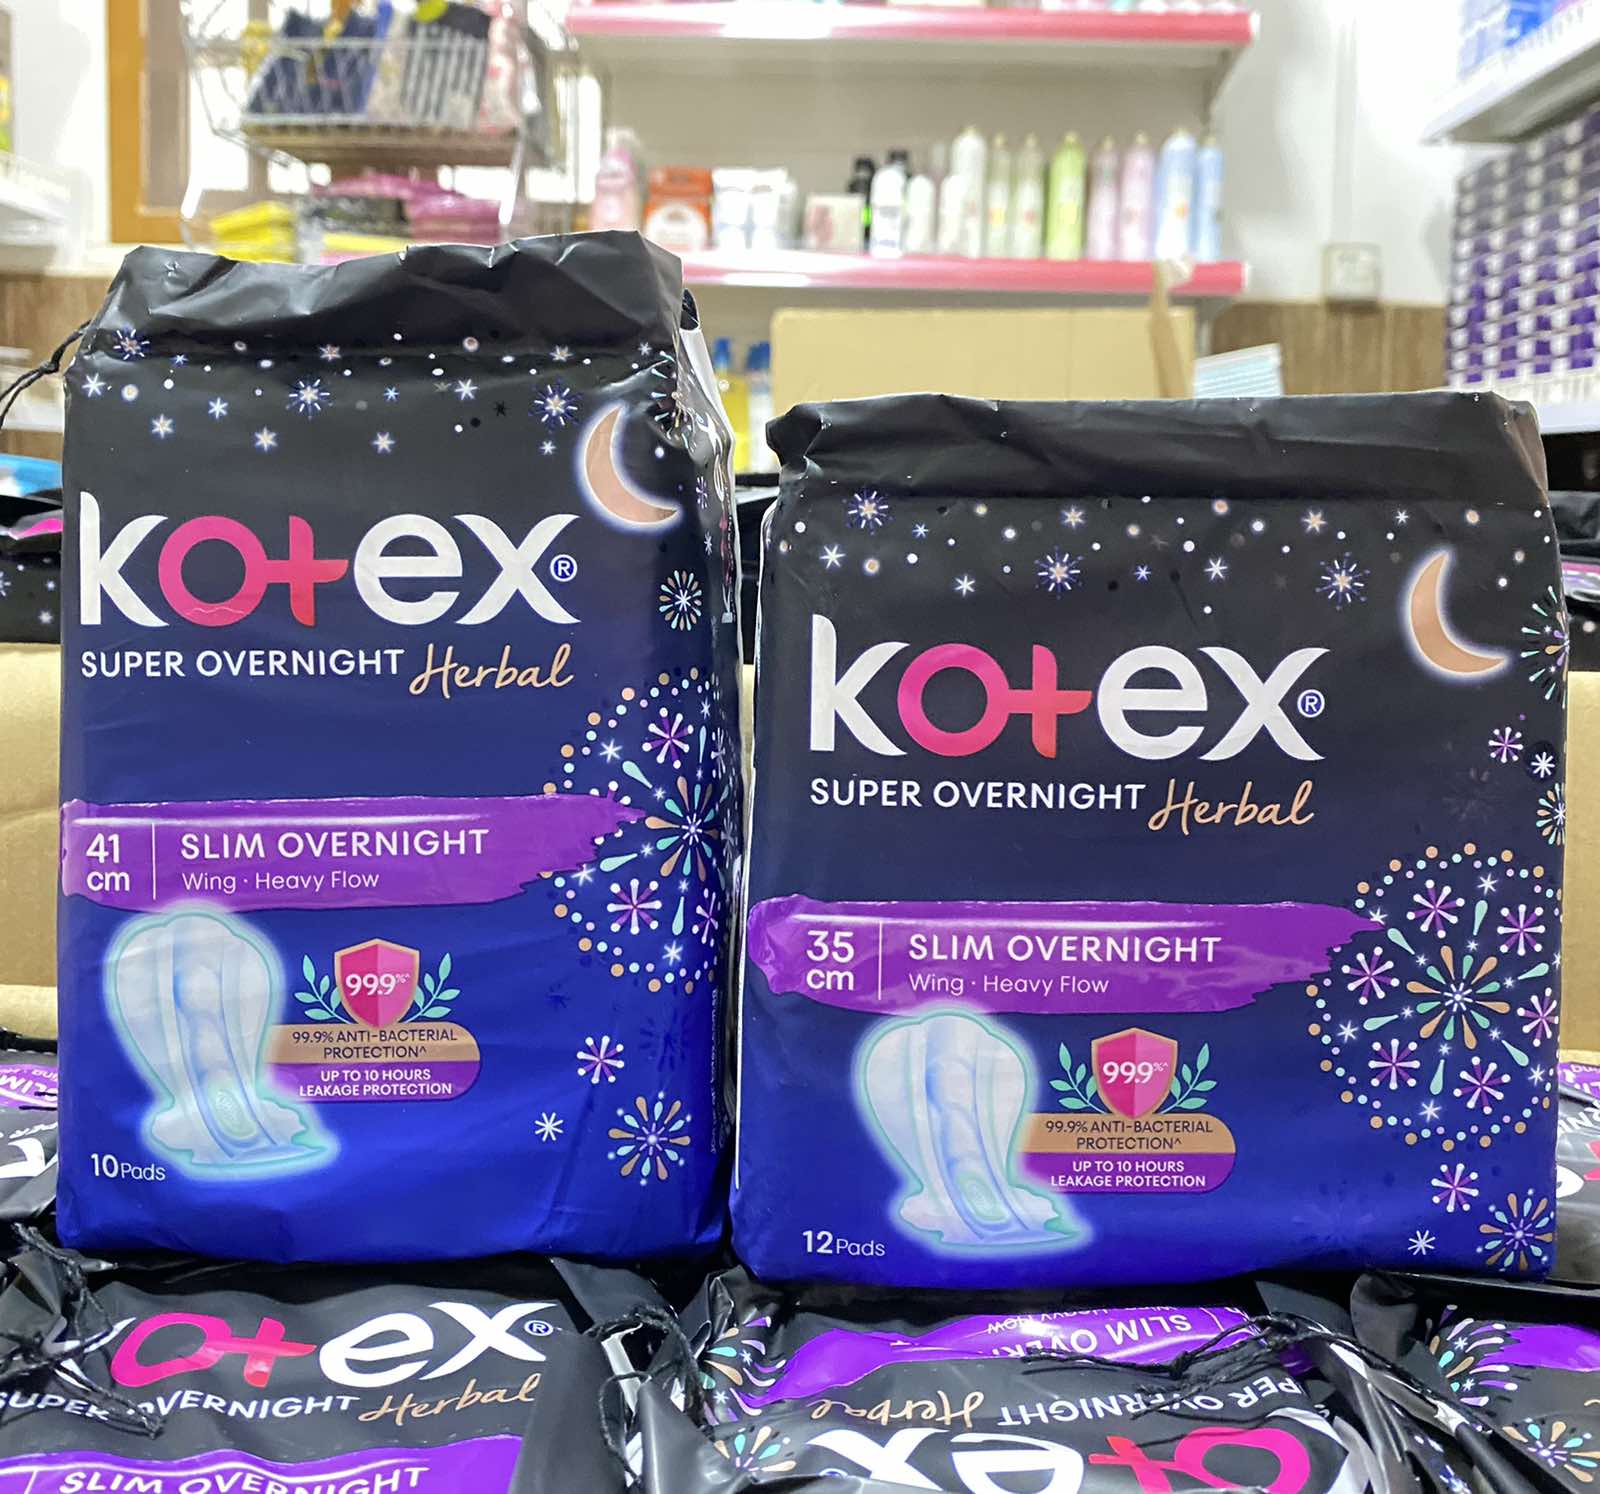 Kotex Herbal Super Overnight 41cm 10pcs